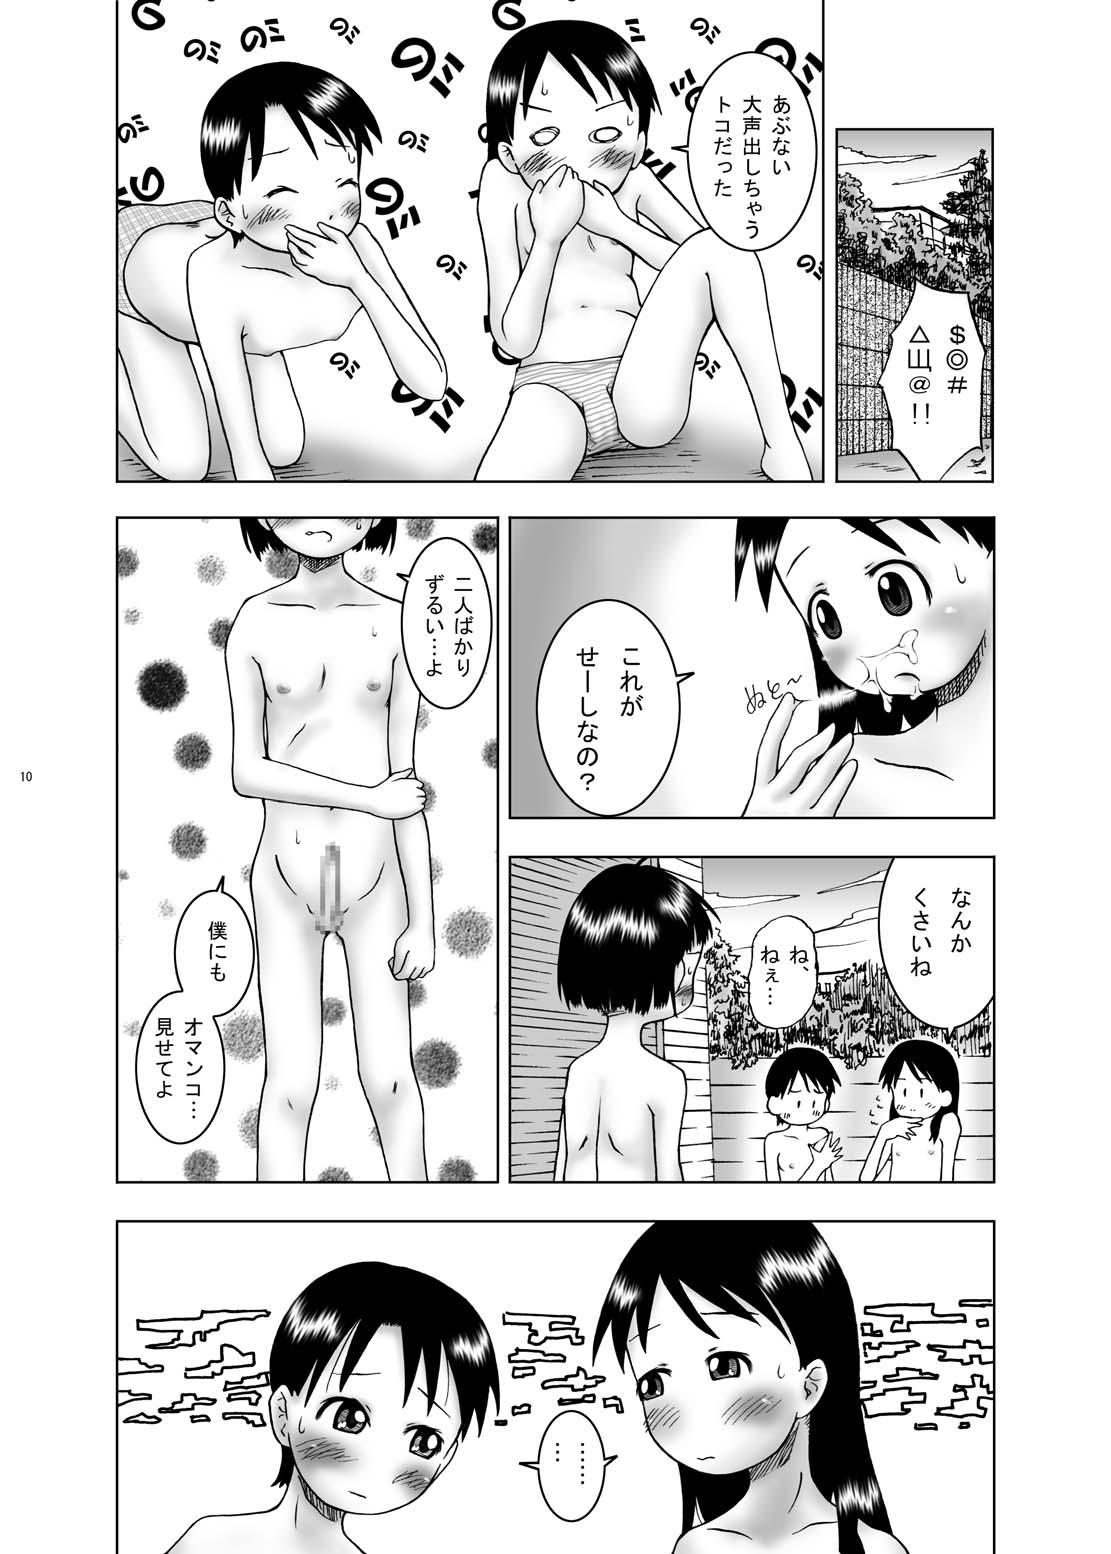 Mofos Aya x Haya - Yotsubato T Girl - Page 10